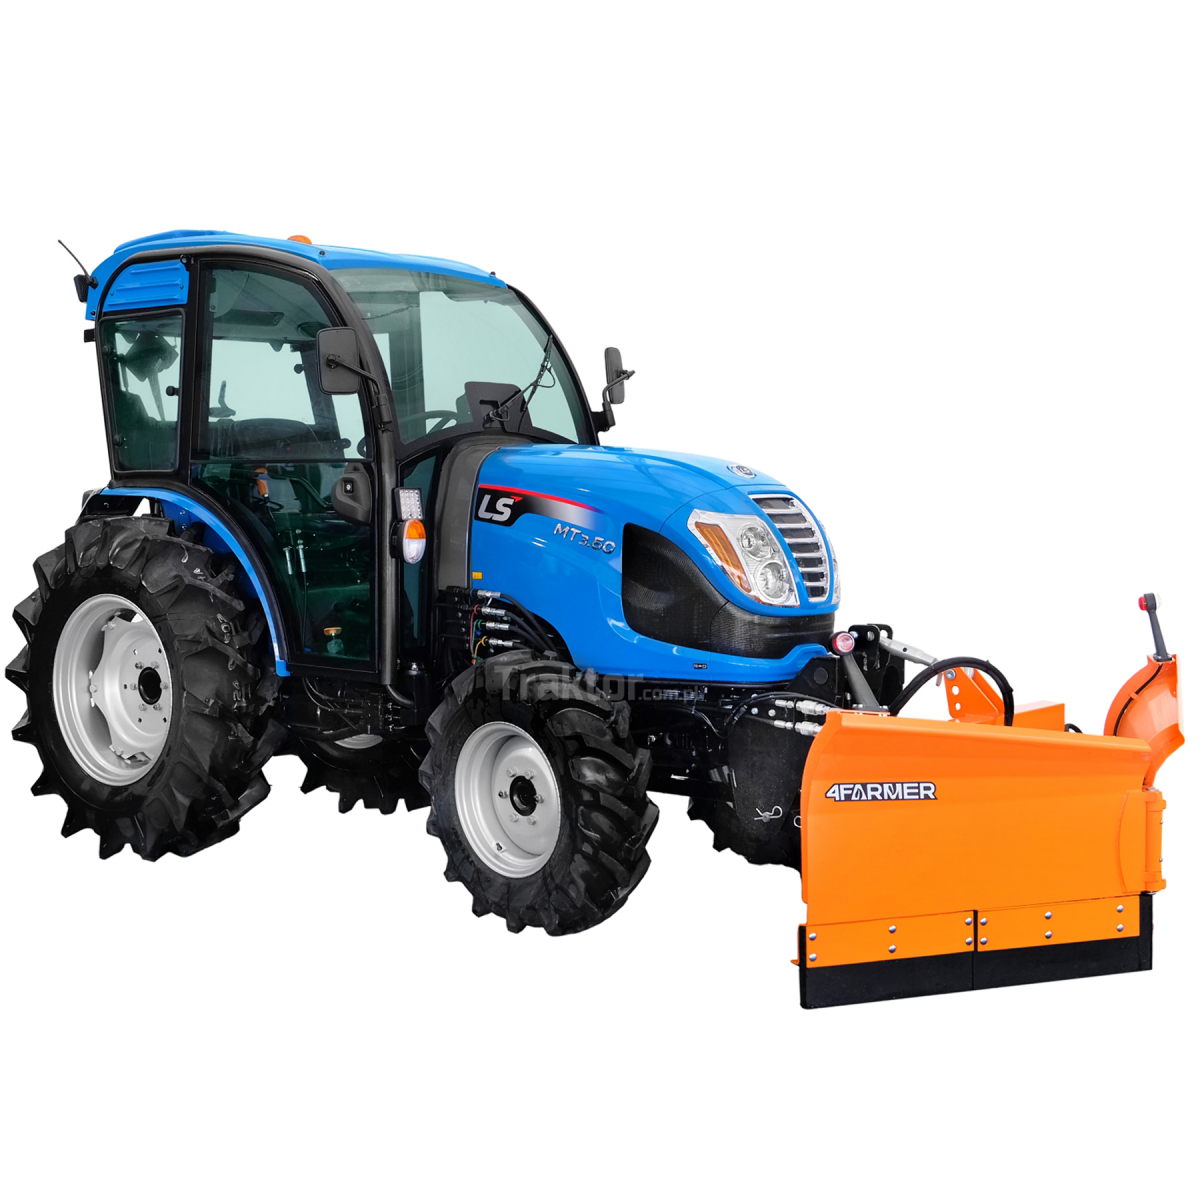 LS Traktor MT3.50 MEC 4x4 - 47 HP / KABINA s klimatizací + sněhový pluh Vario arrow 180 cm, hydraulický (TUZ) 4FARMER